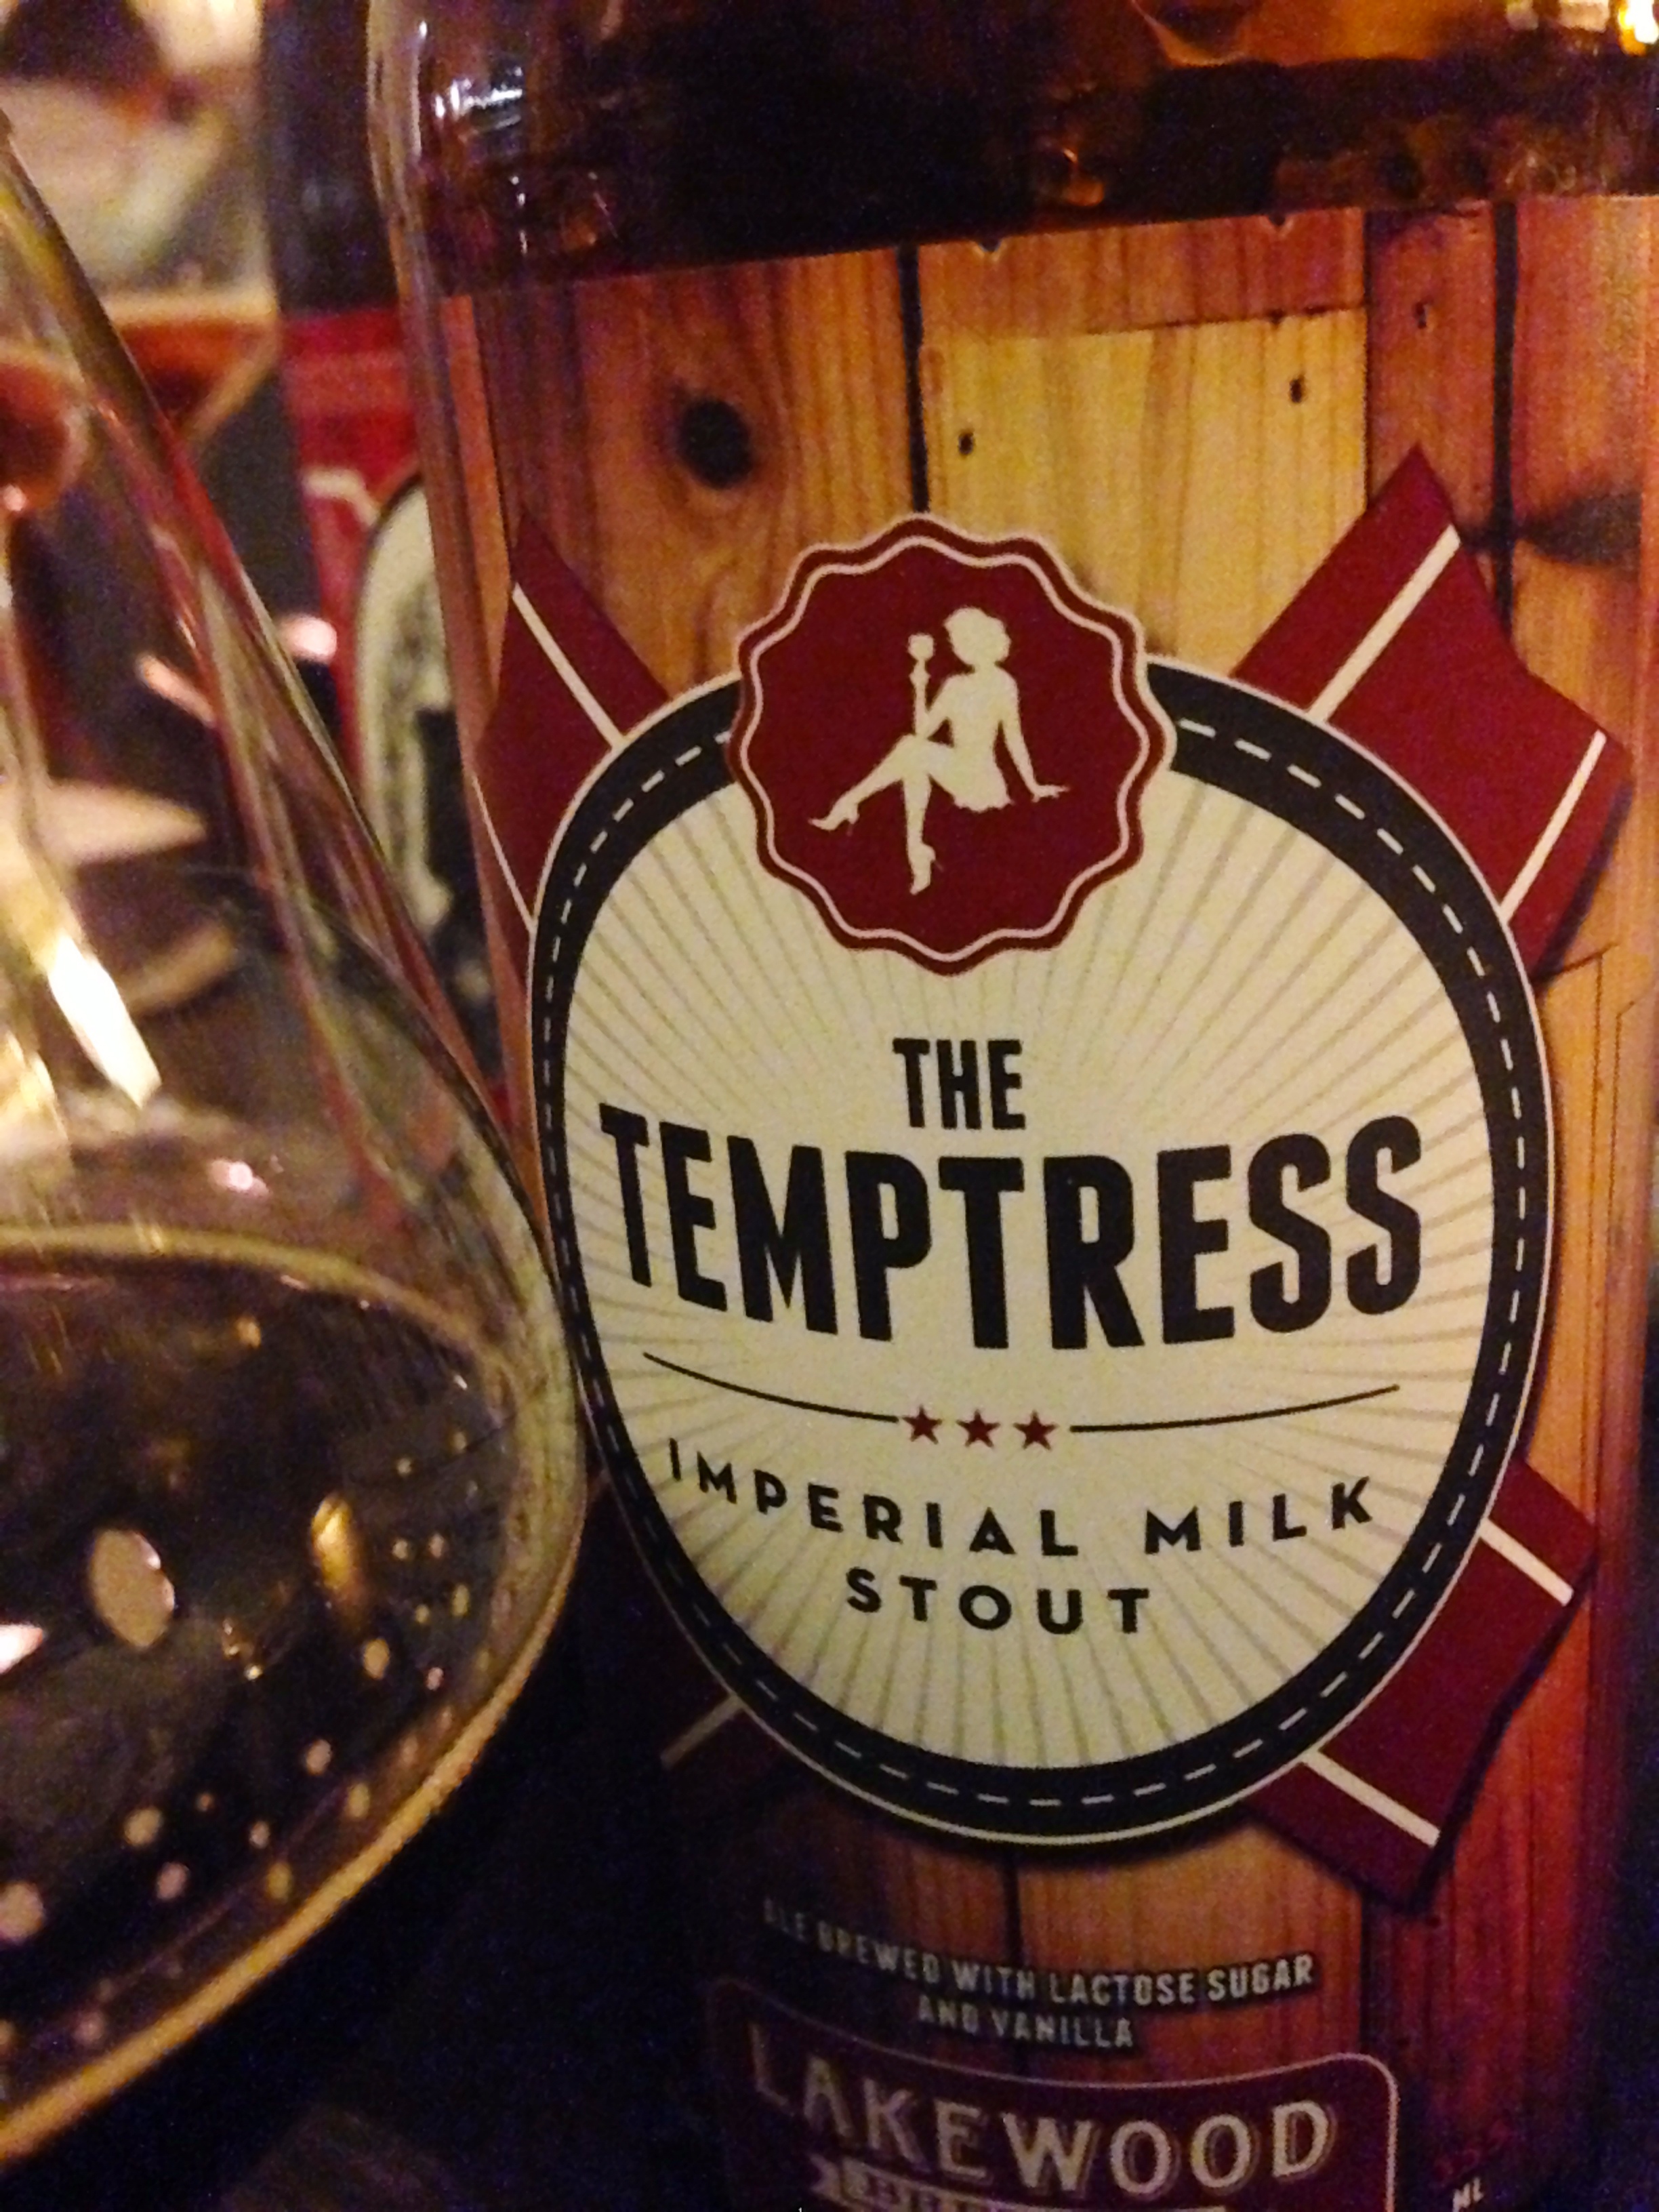 The Temptress Imperial Milk Stout